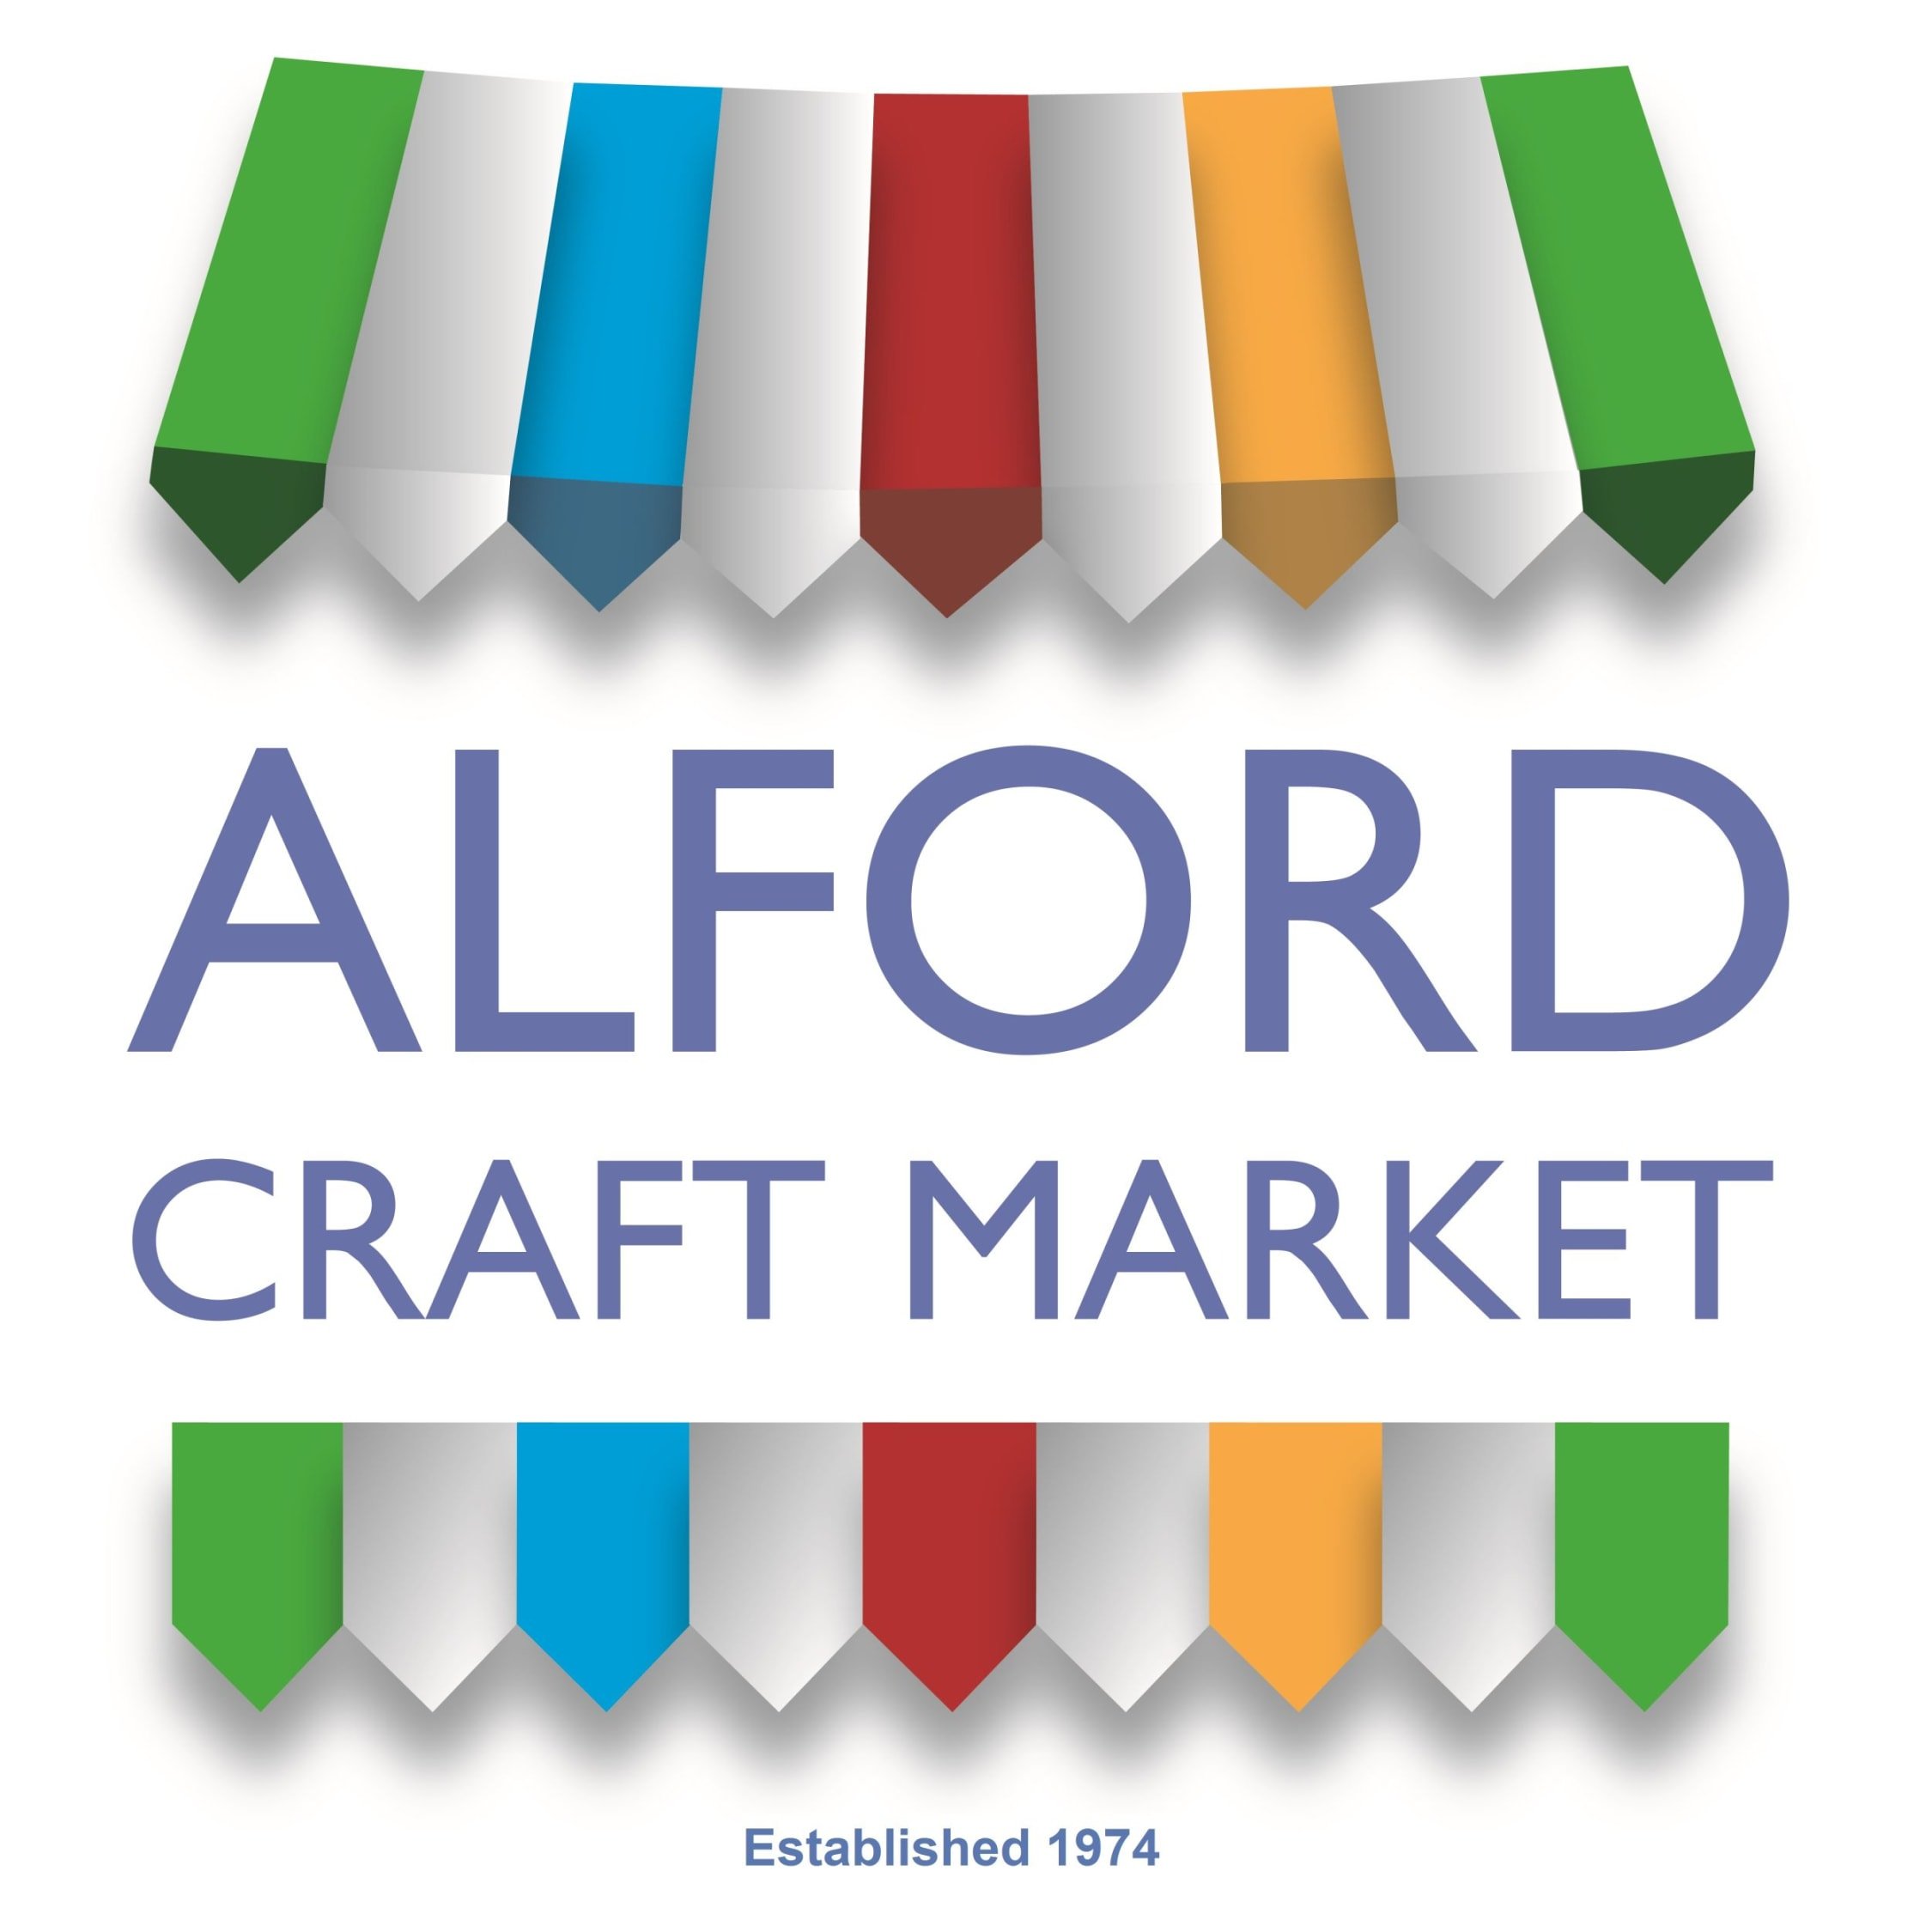 Alford Craft Market